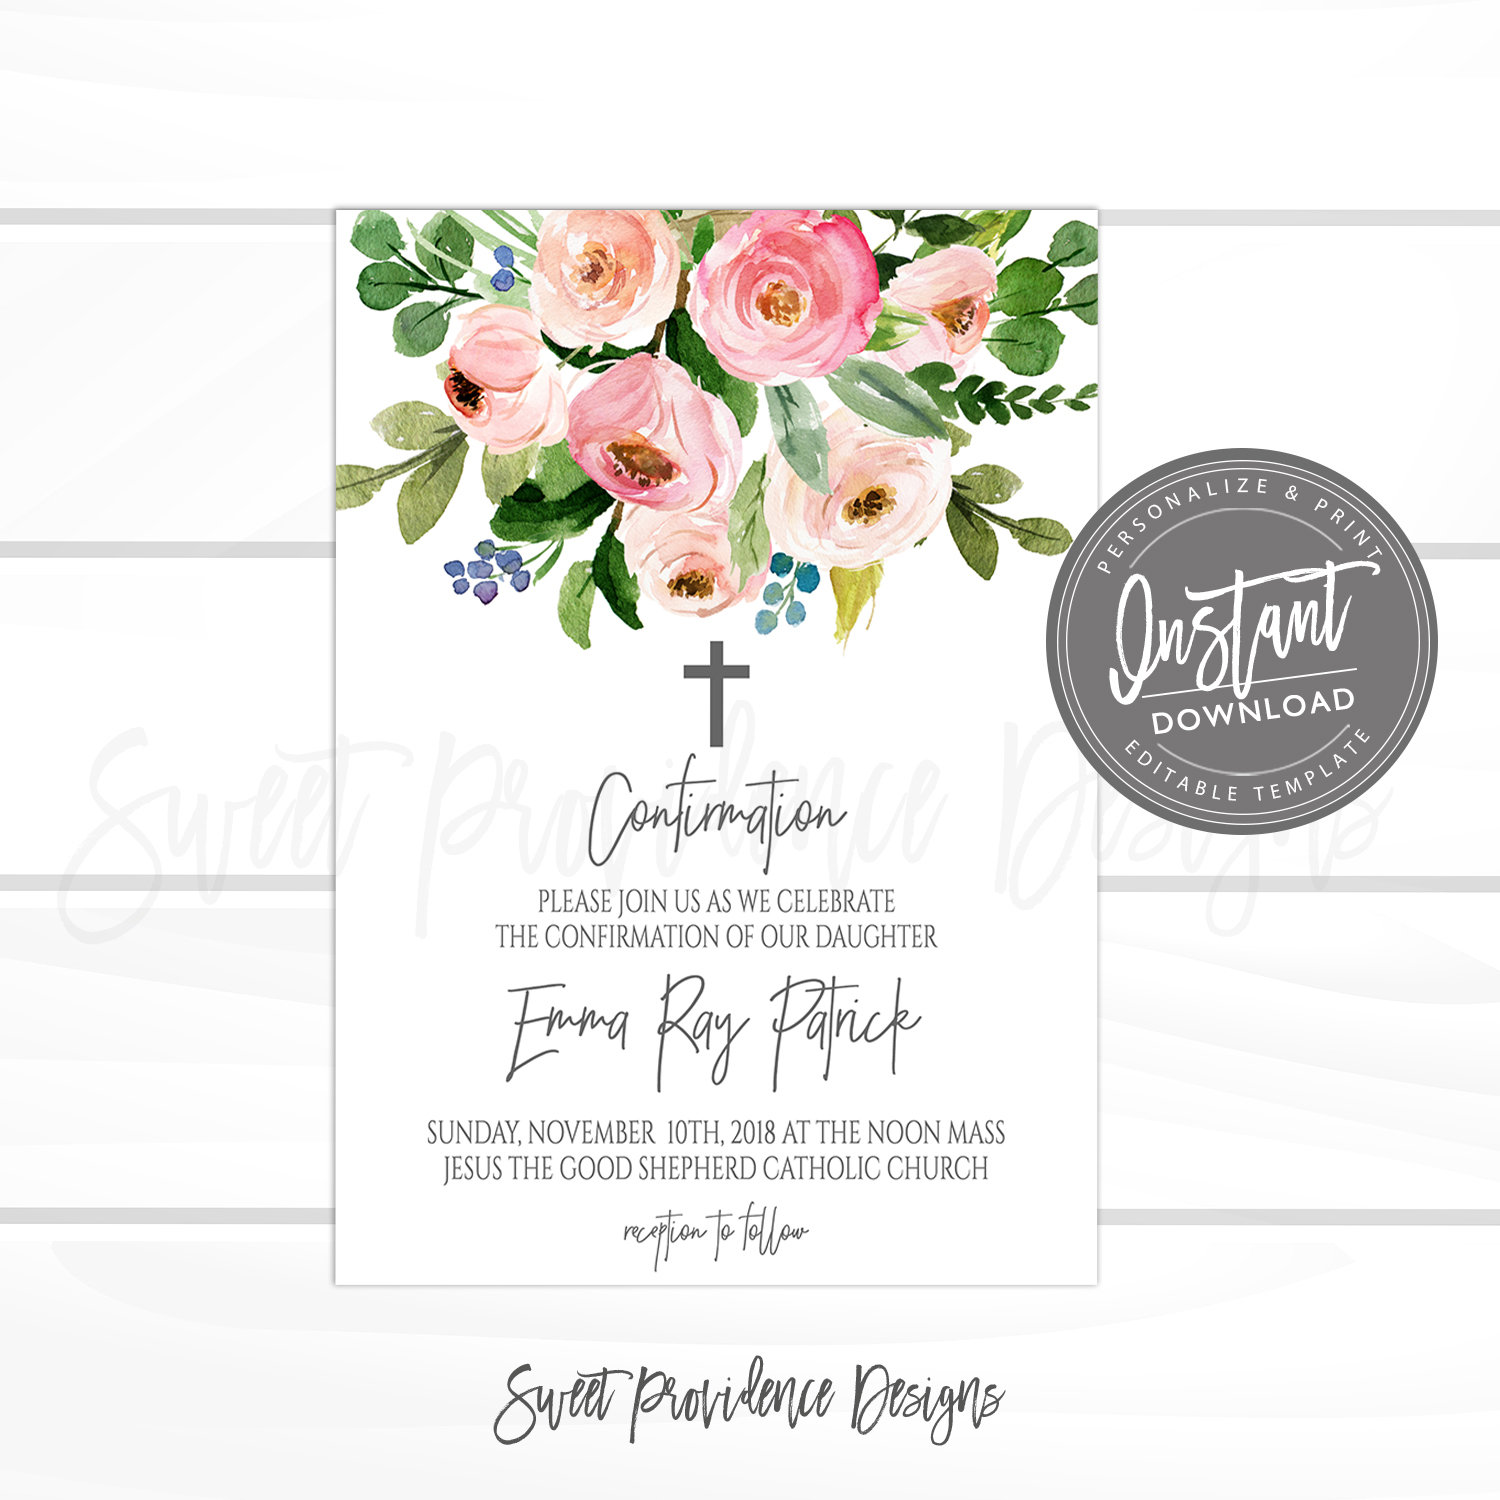 confirmation-invitation-sweet-providence-designs